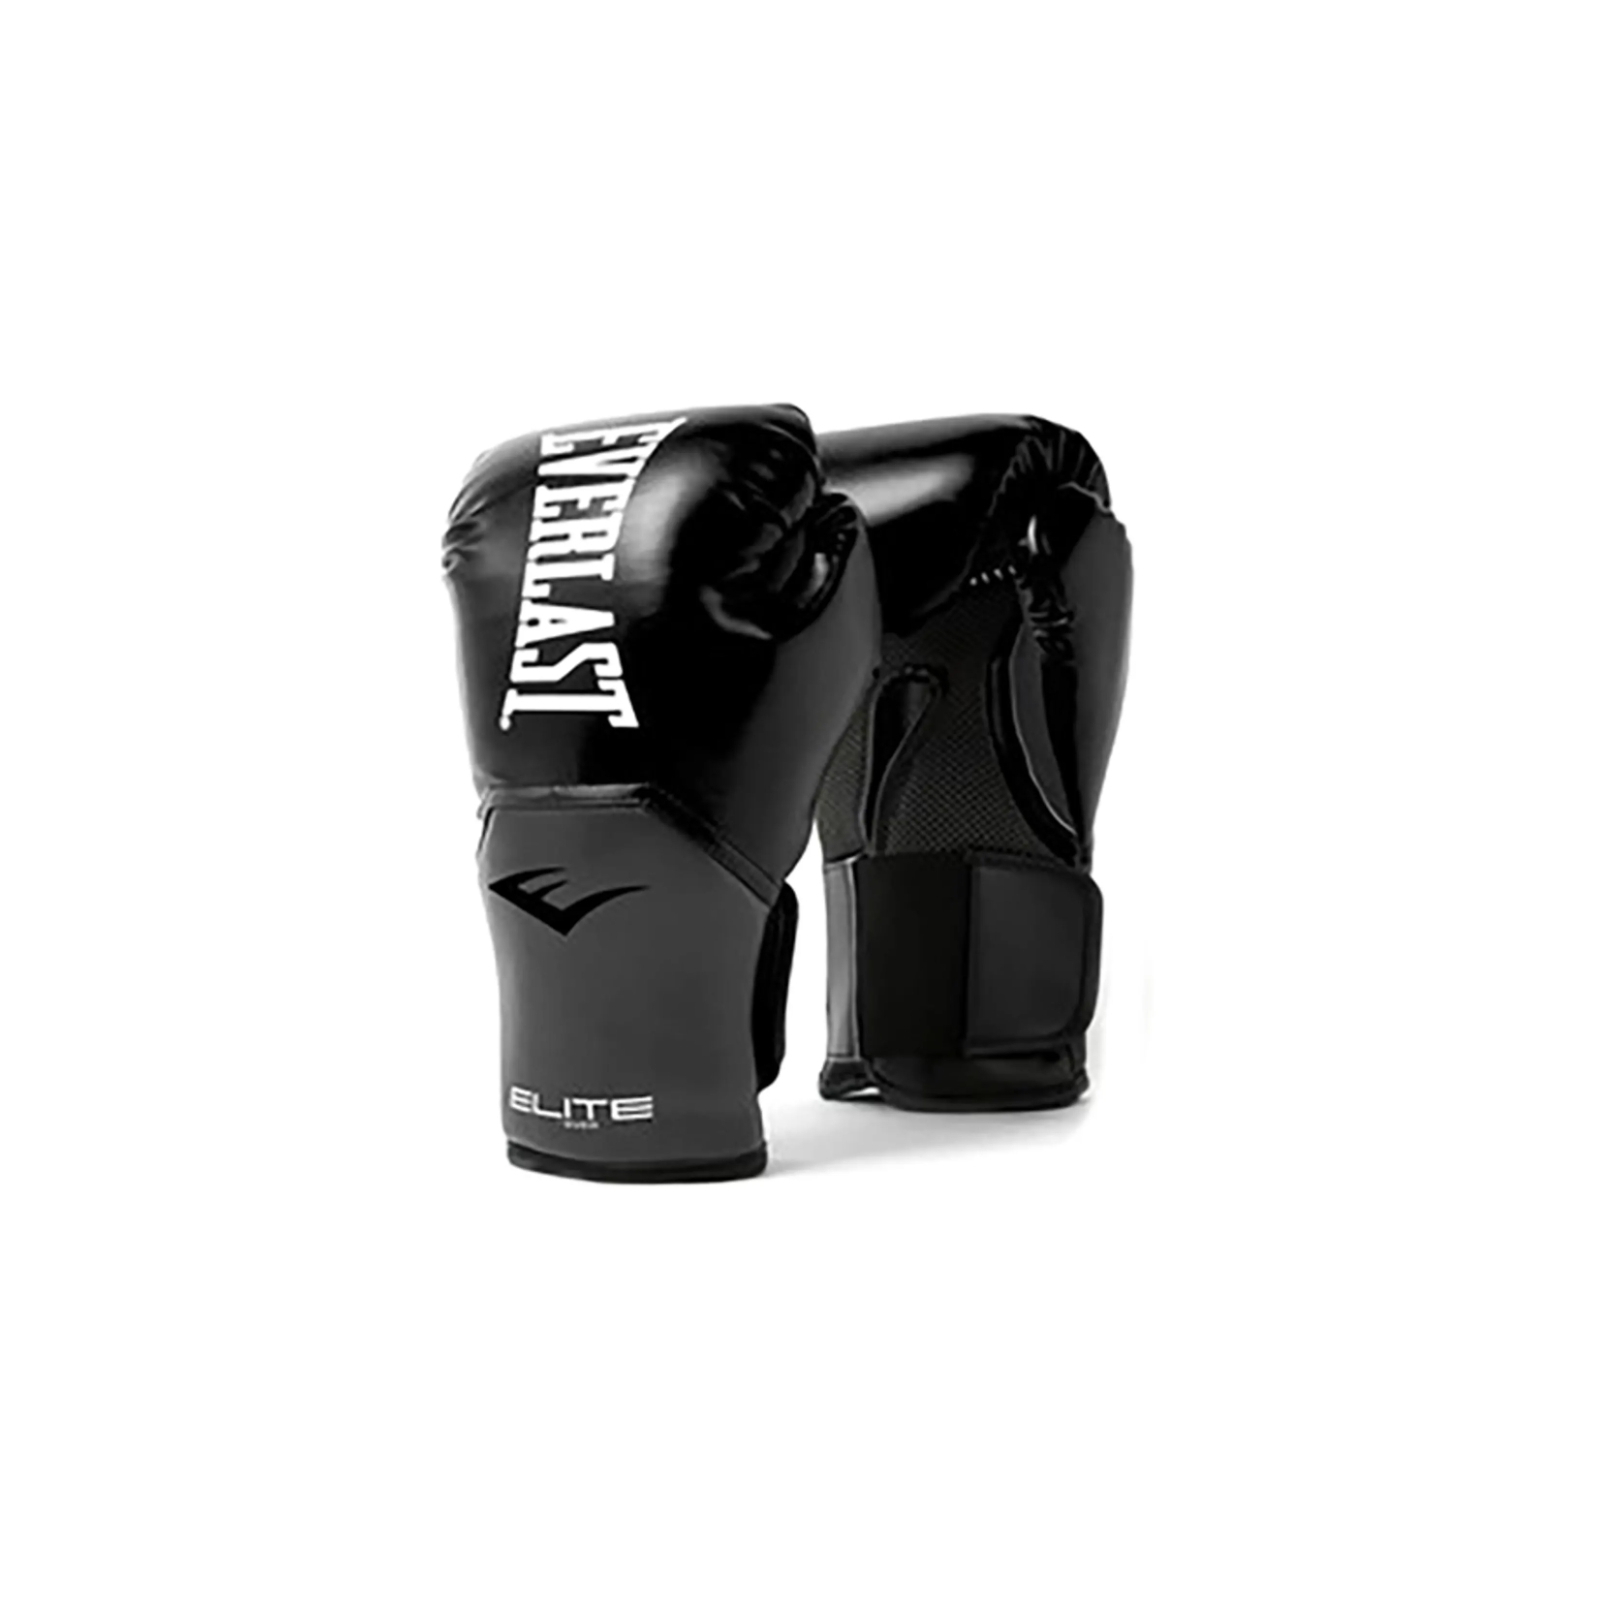 Боксерские перчатки Everlast Elite Training Gloves 870284-70-4 червоний 14 oz (009283608835)